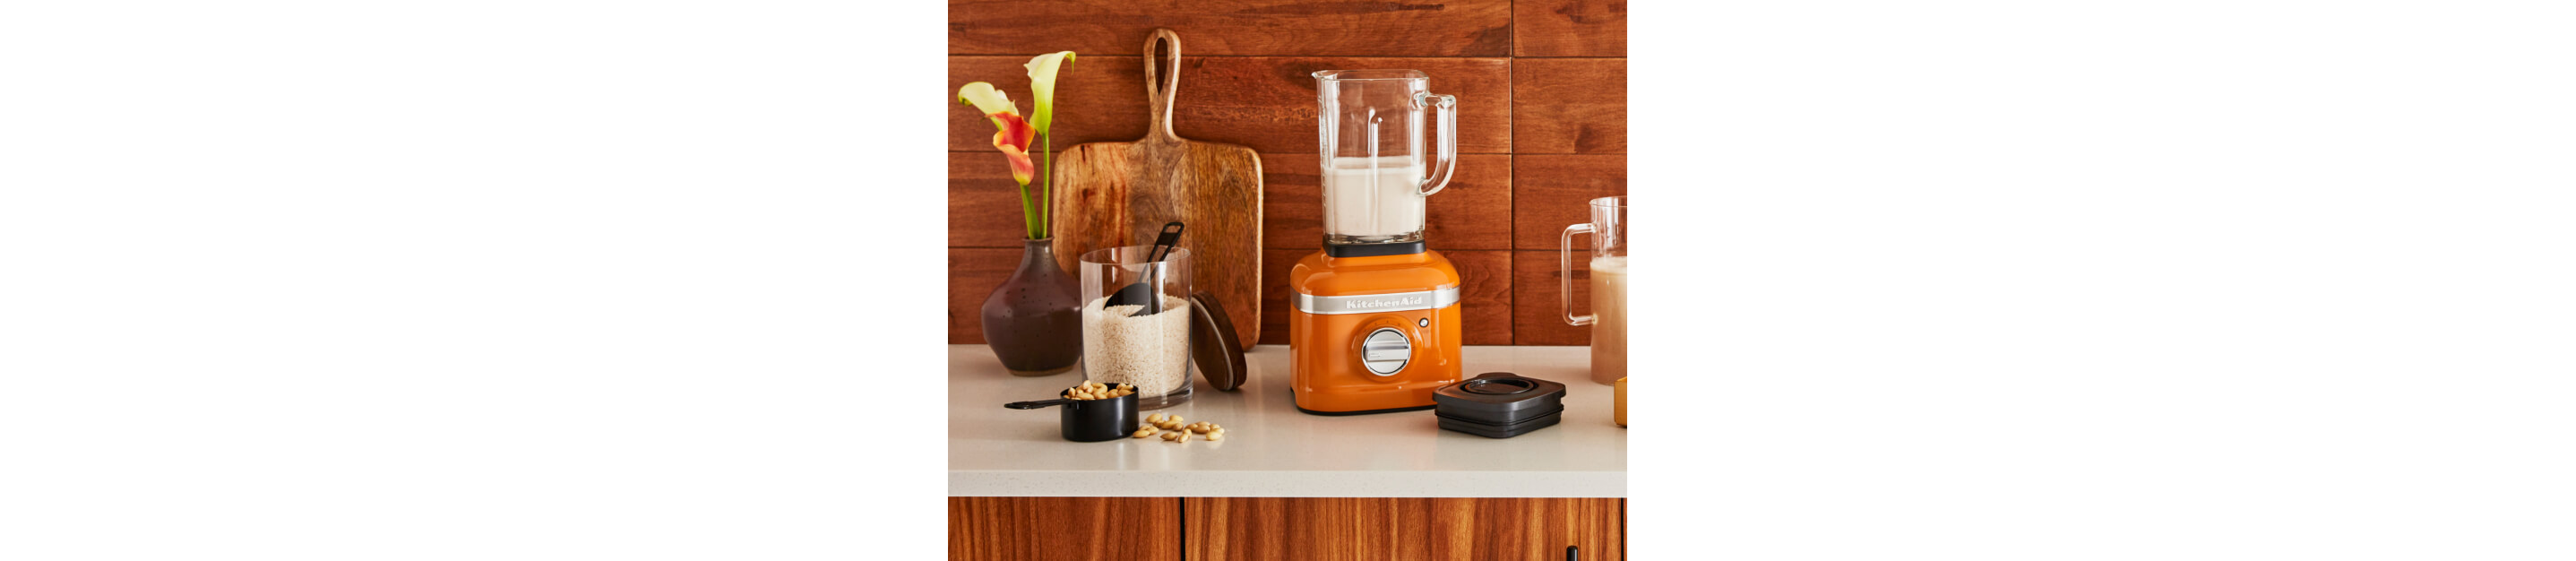 KitchenAid® Blender in Honey against a wooden backsplash